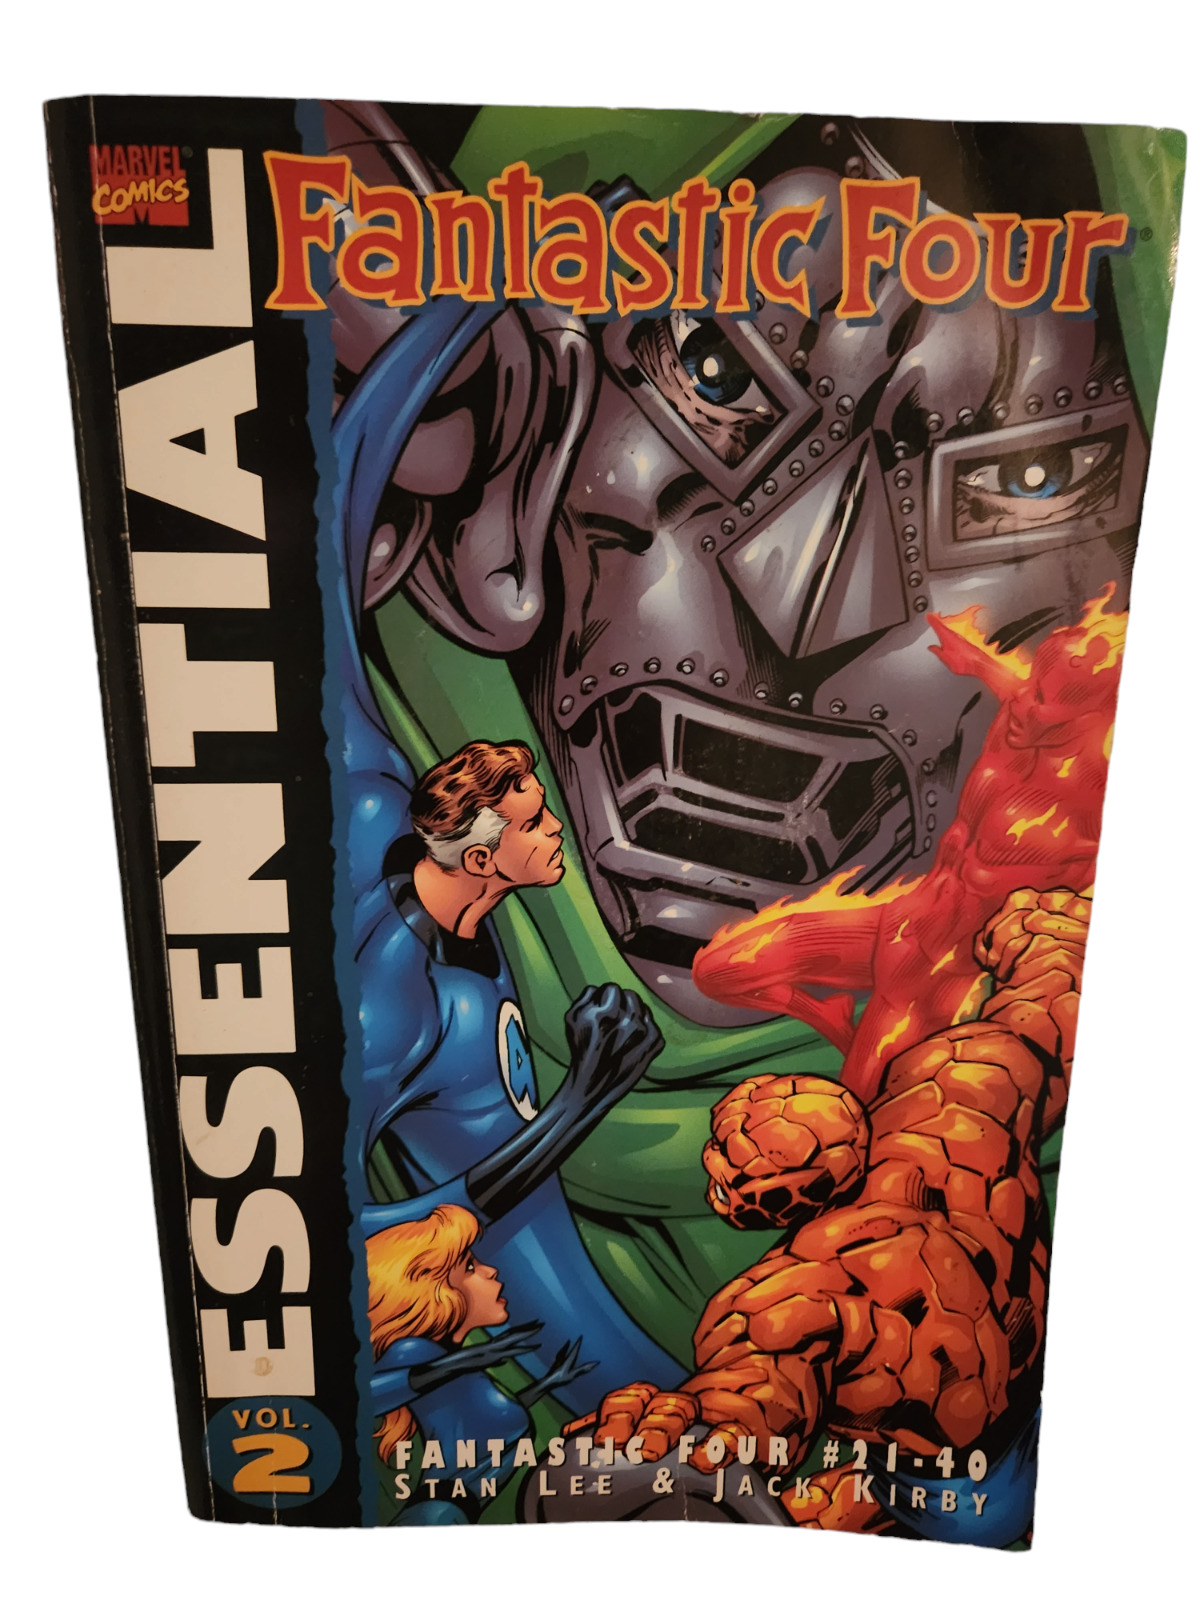 Marvel Essential Fantastic Four Vol 2 # 21-40 TPB Jack Kirby Stan Lee 2001